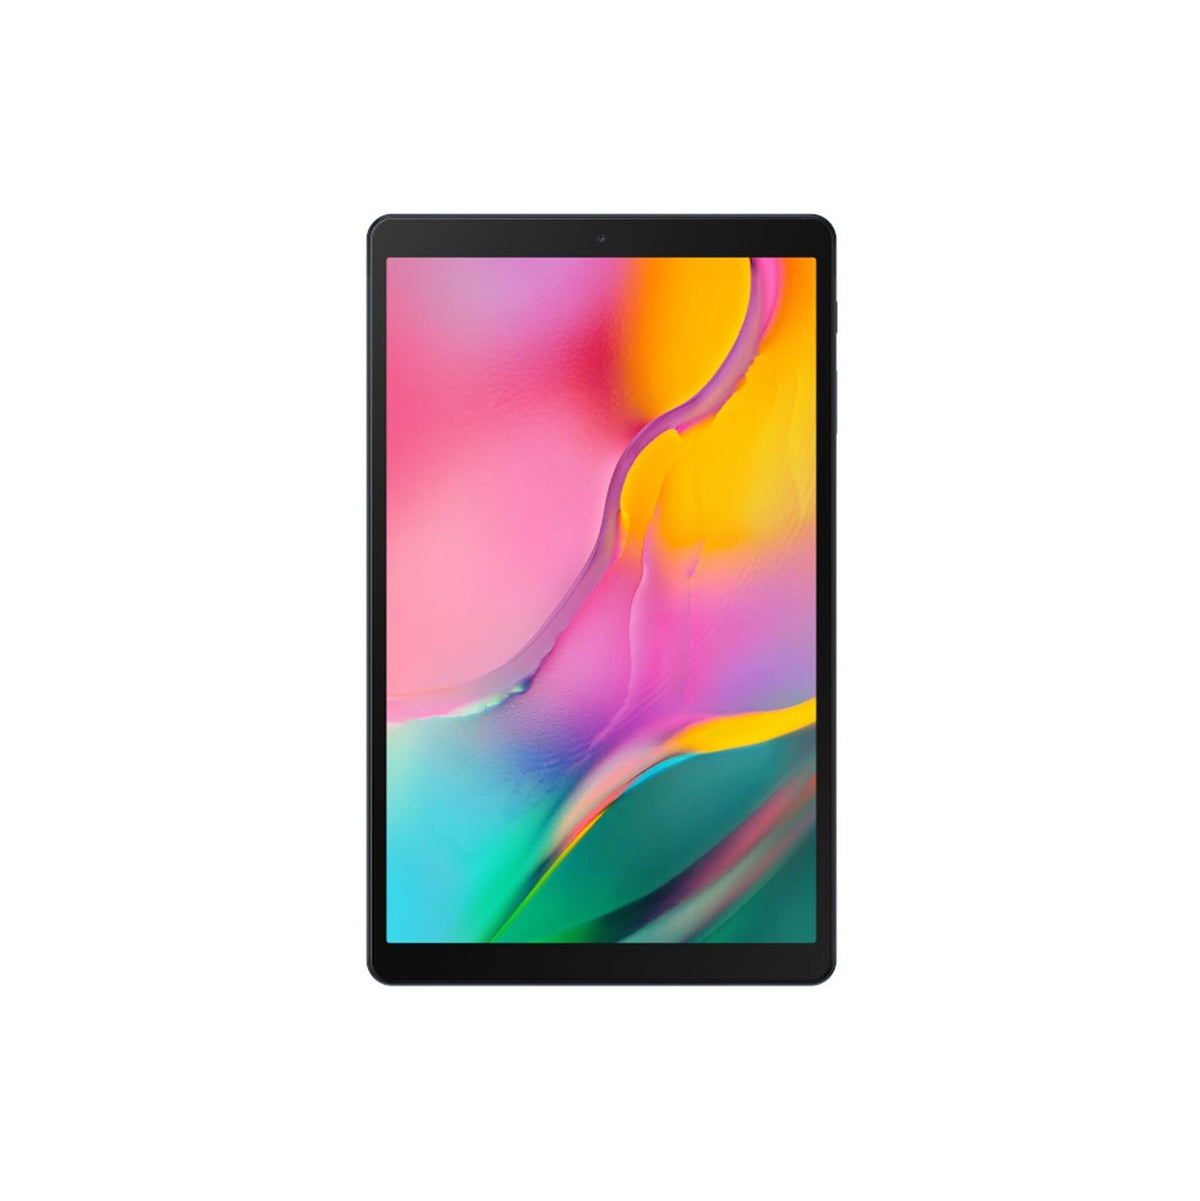 Tablet Samsung Galaxy Tab A 10.1 SM-T510 32GB WiFi, Čierna